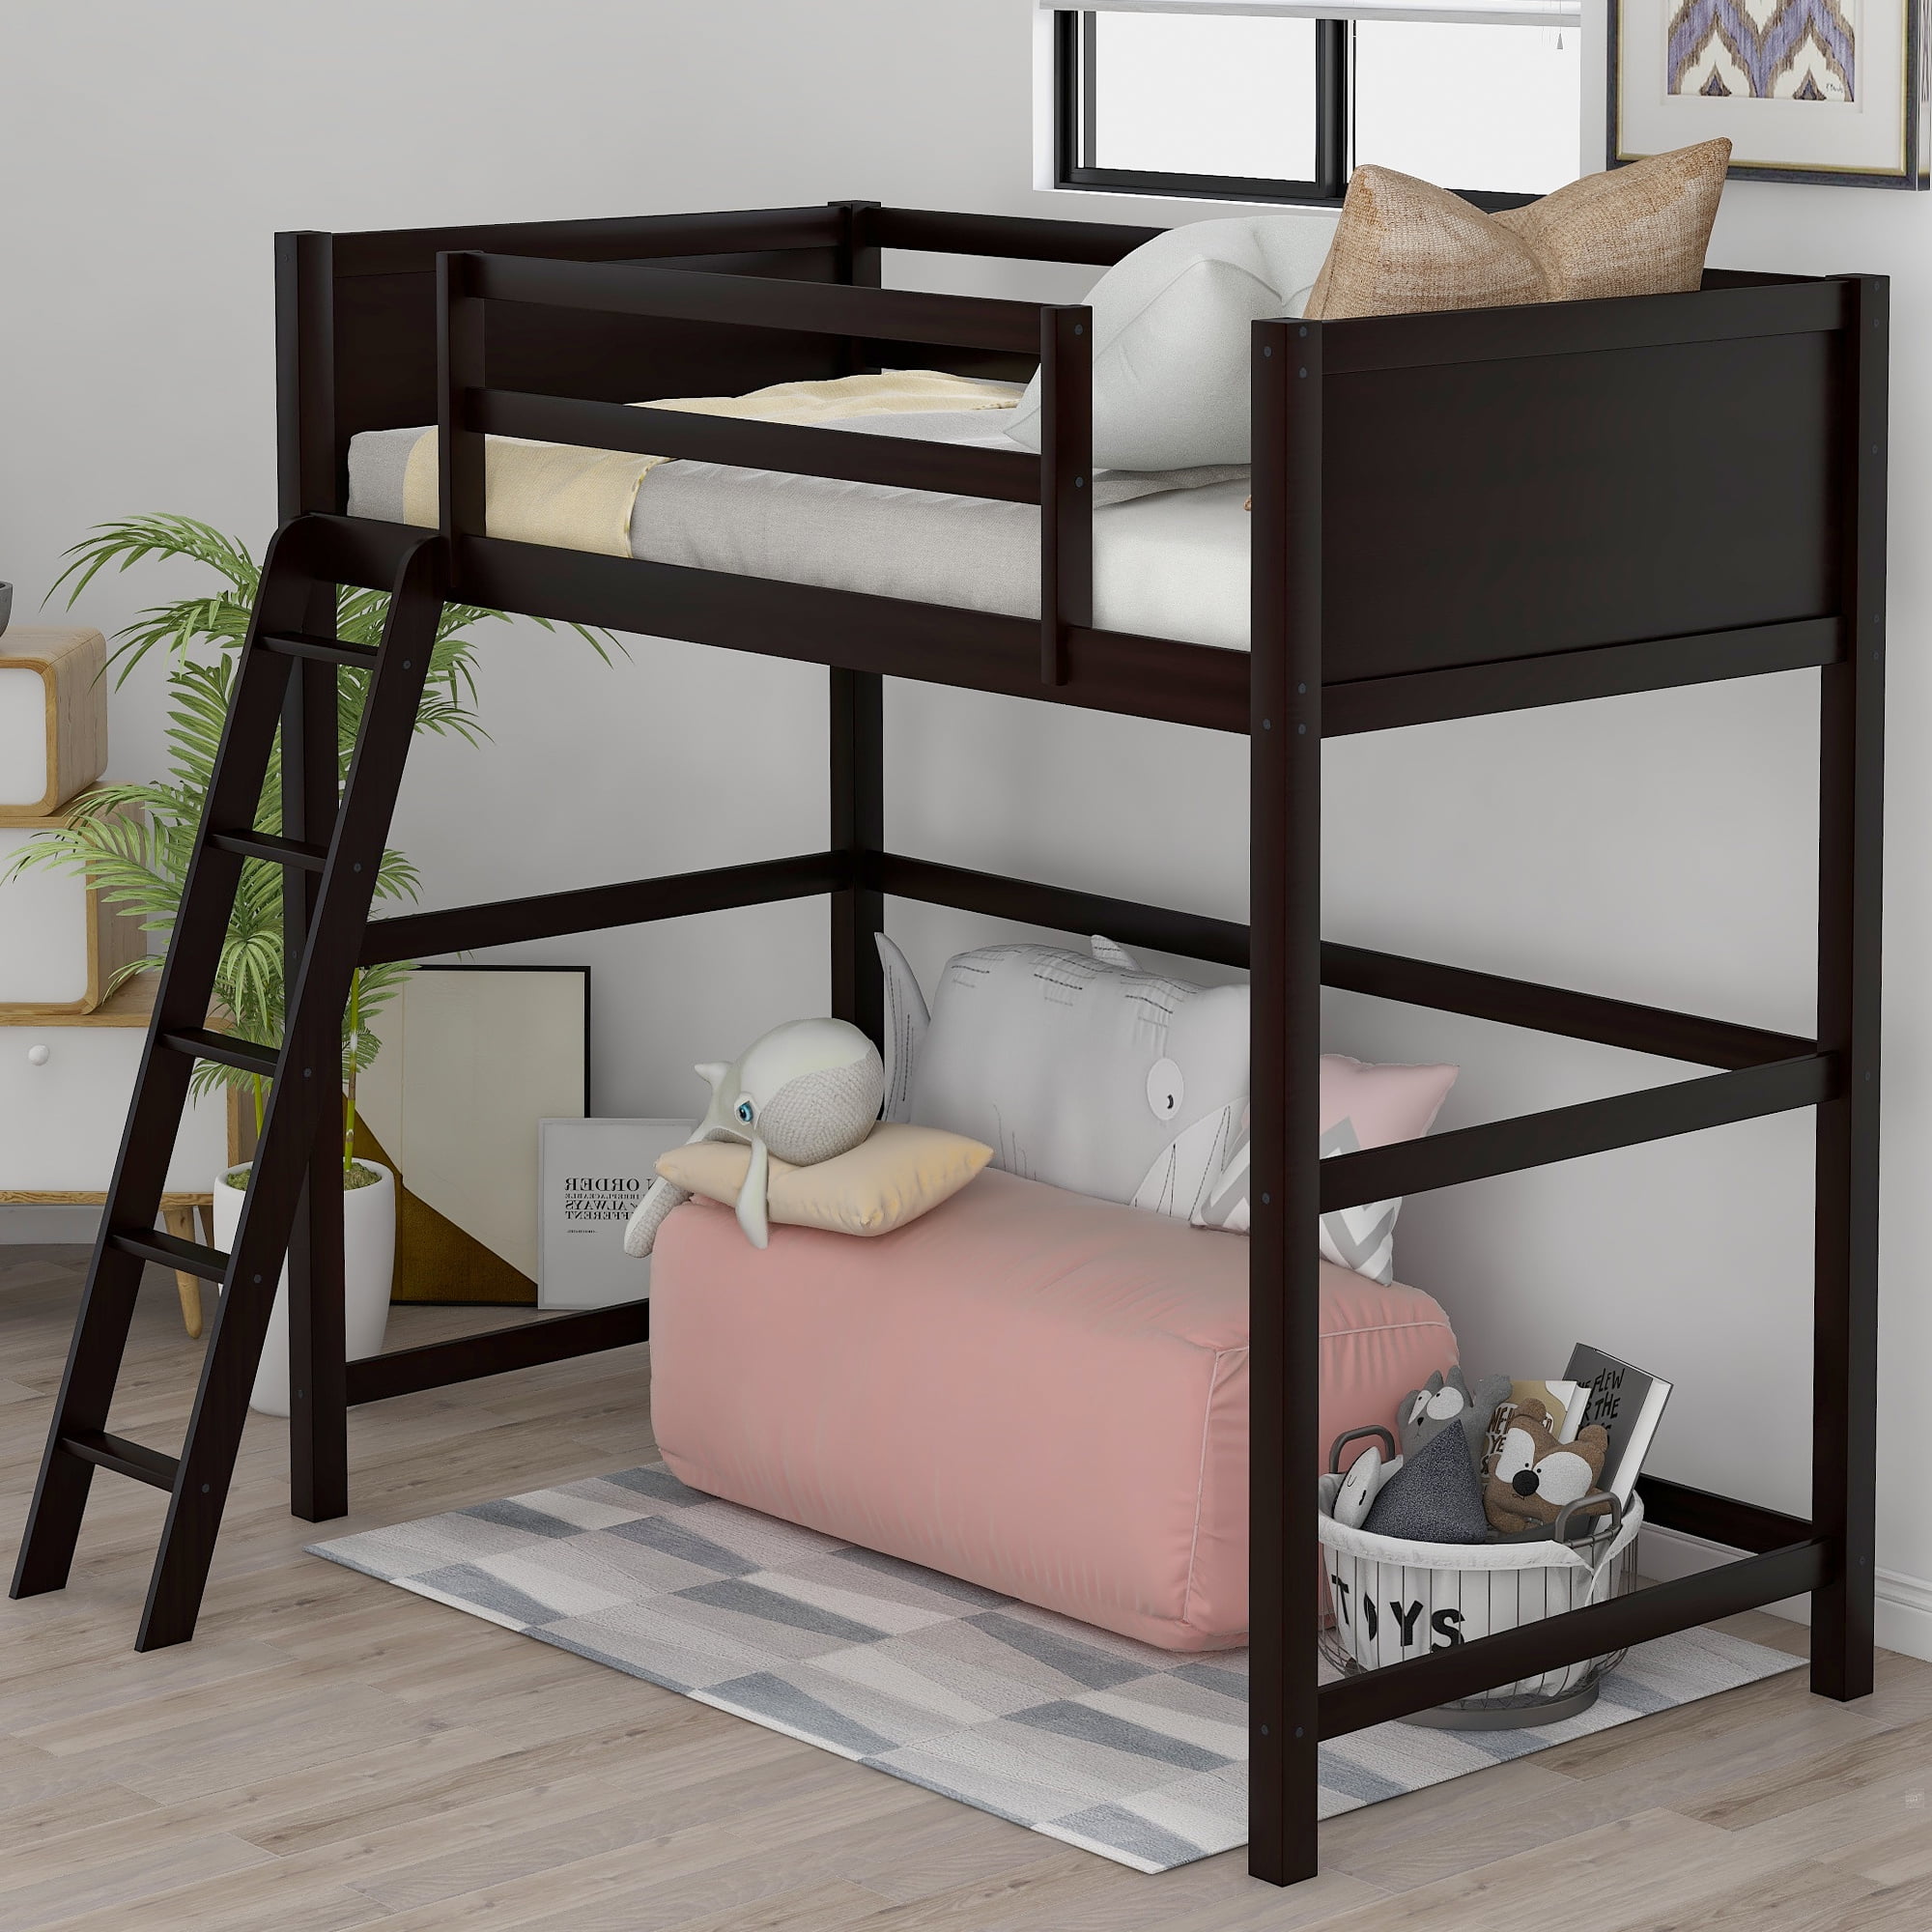 Twin Loft Kids Bunk Bed Children Teens Home Bedroom Furniture with Ladder 